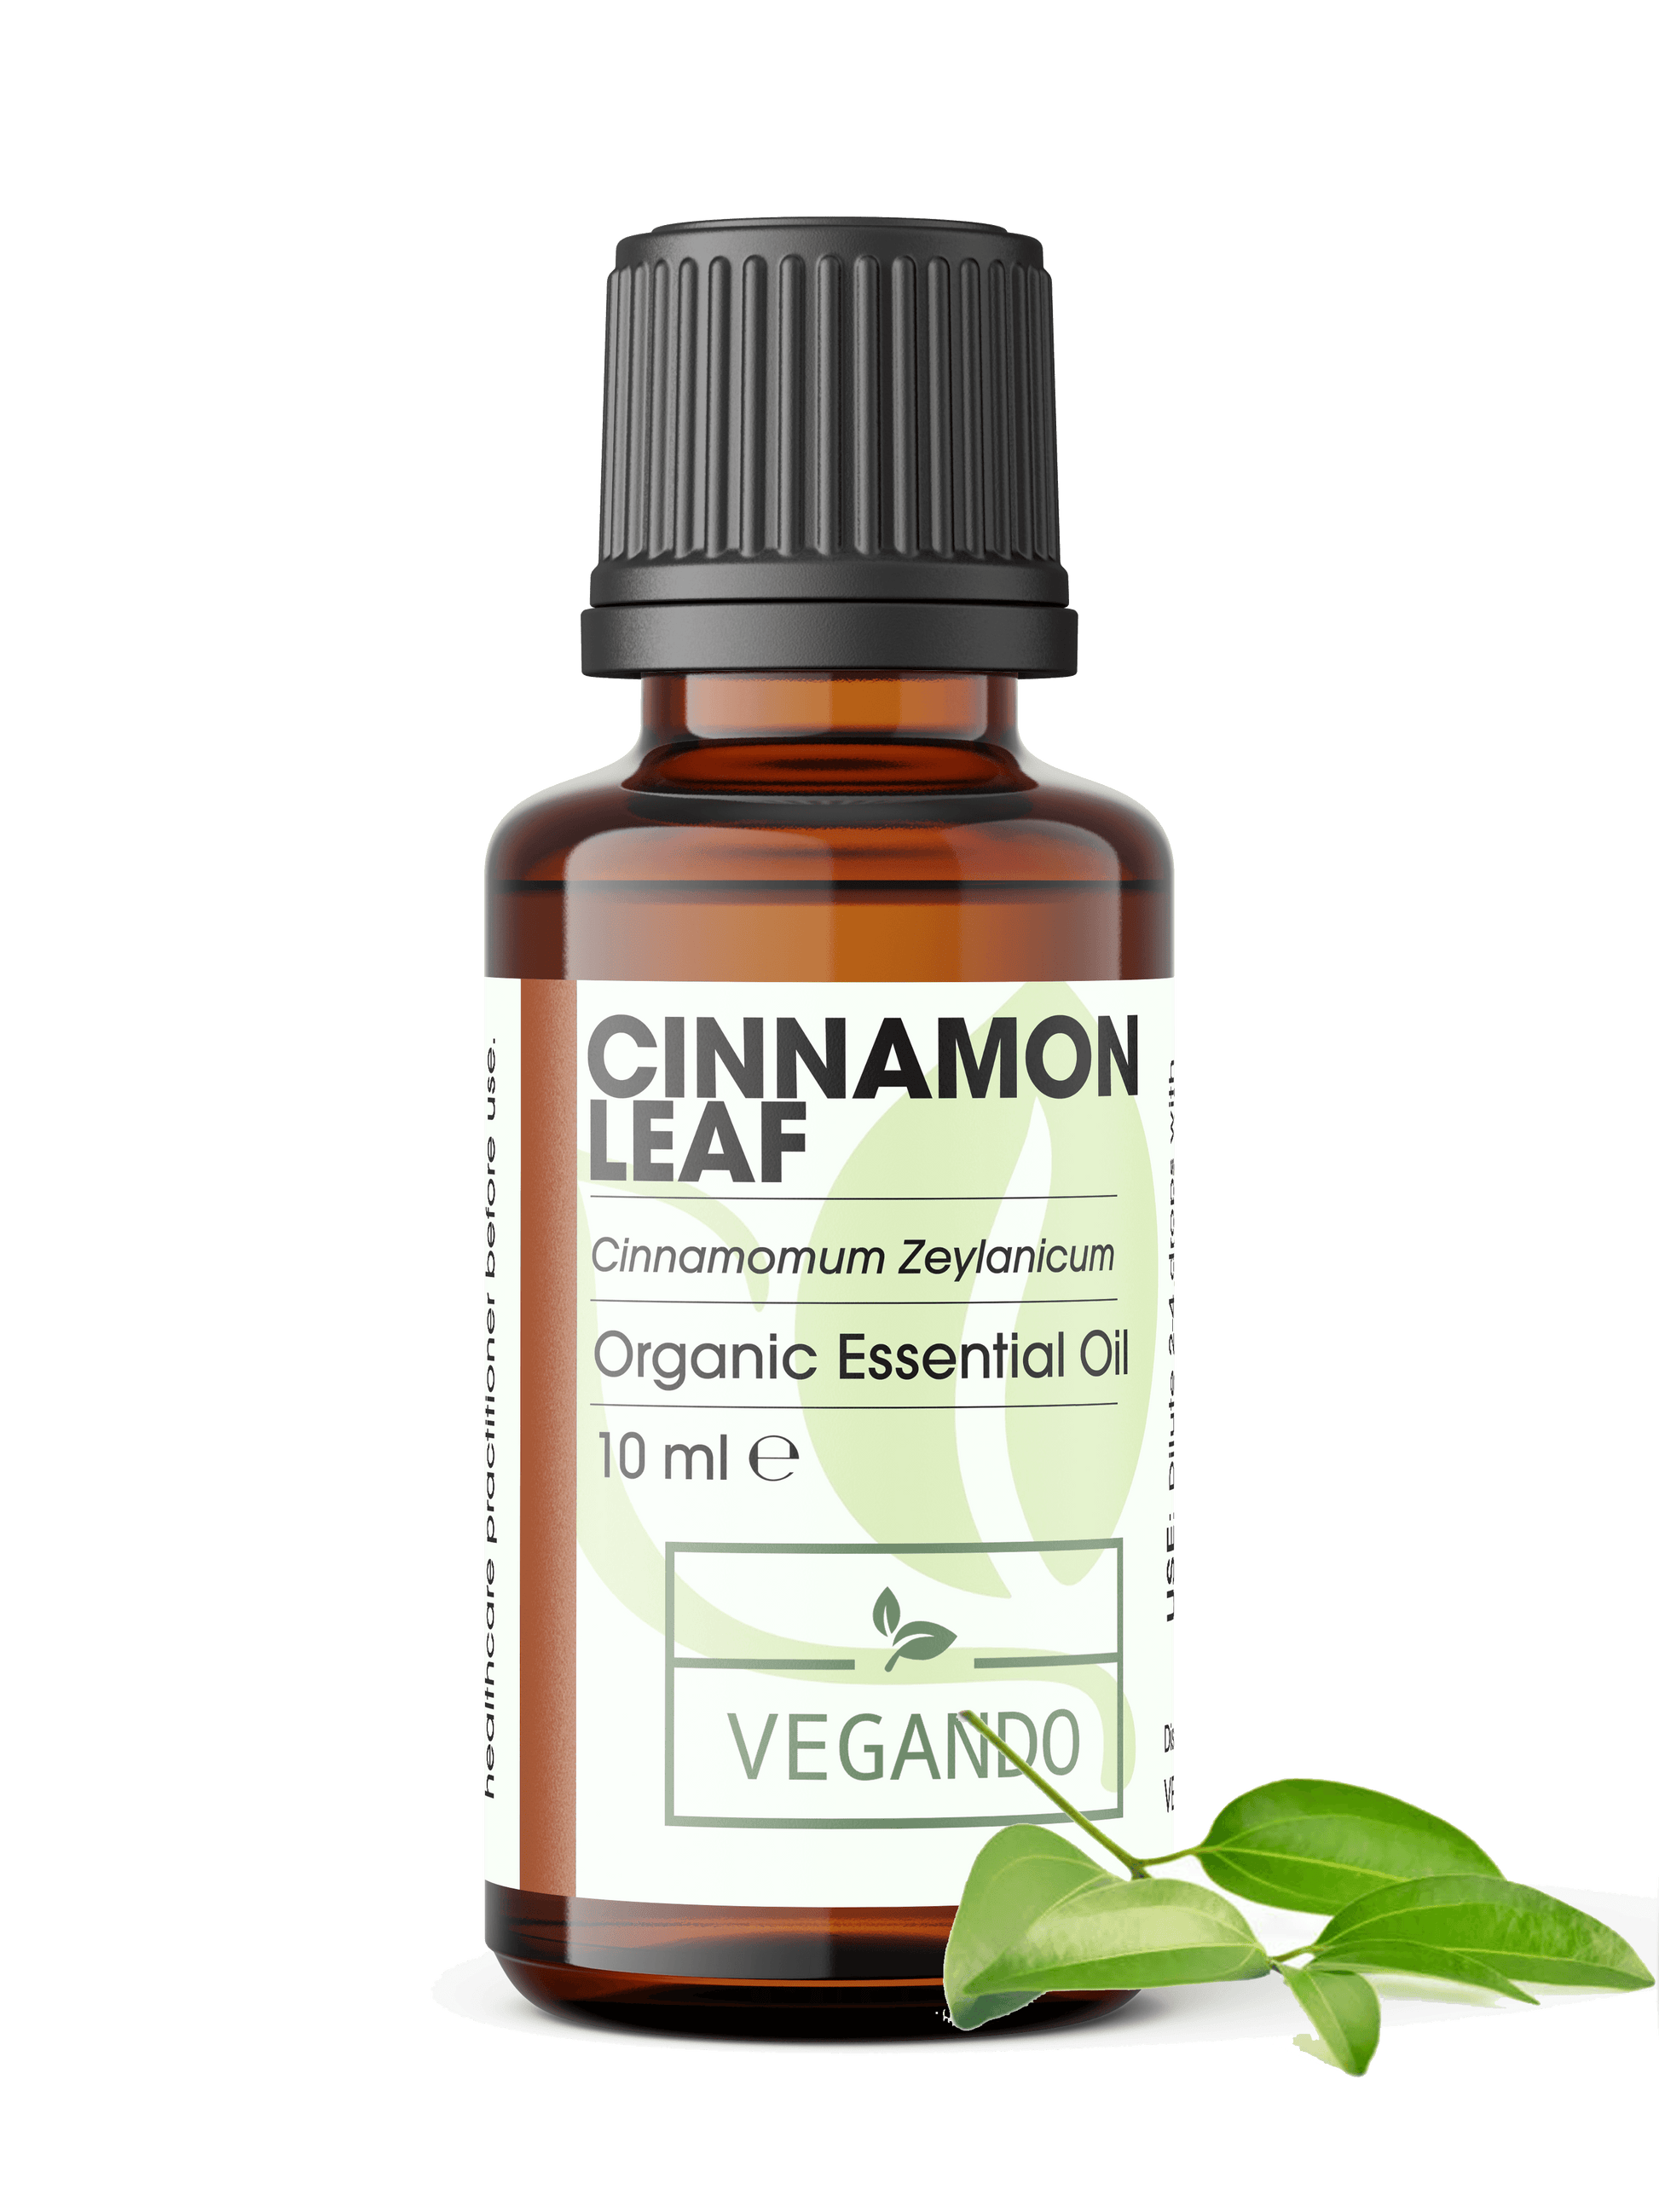 Cinnamon Leaf Organic Essential Oil 10ml.